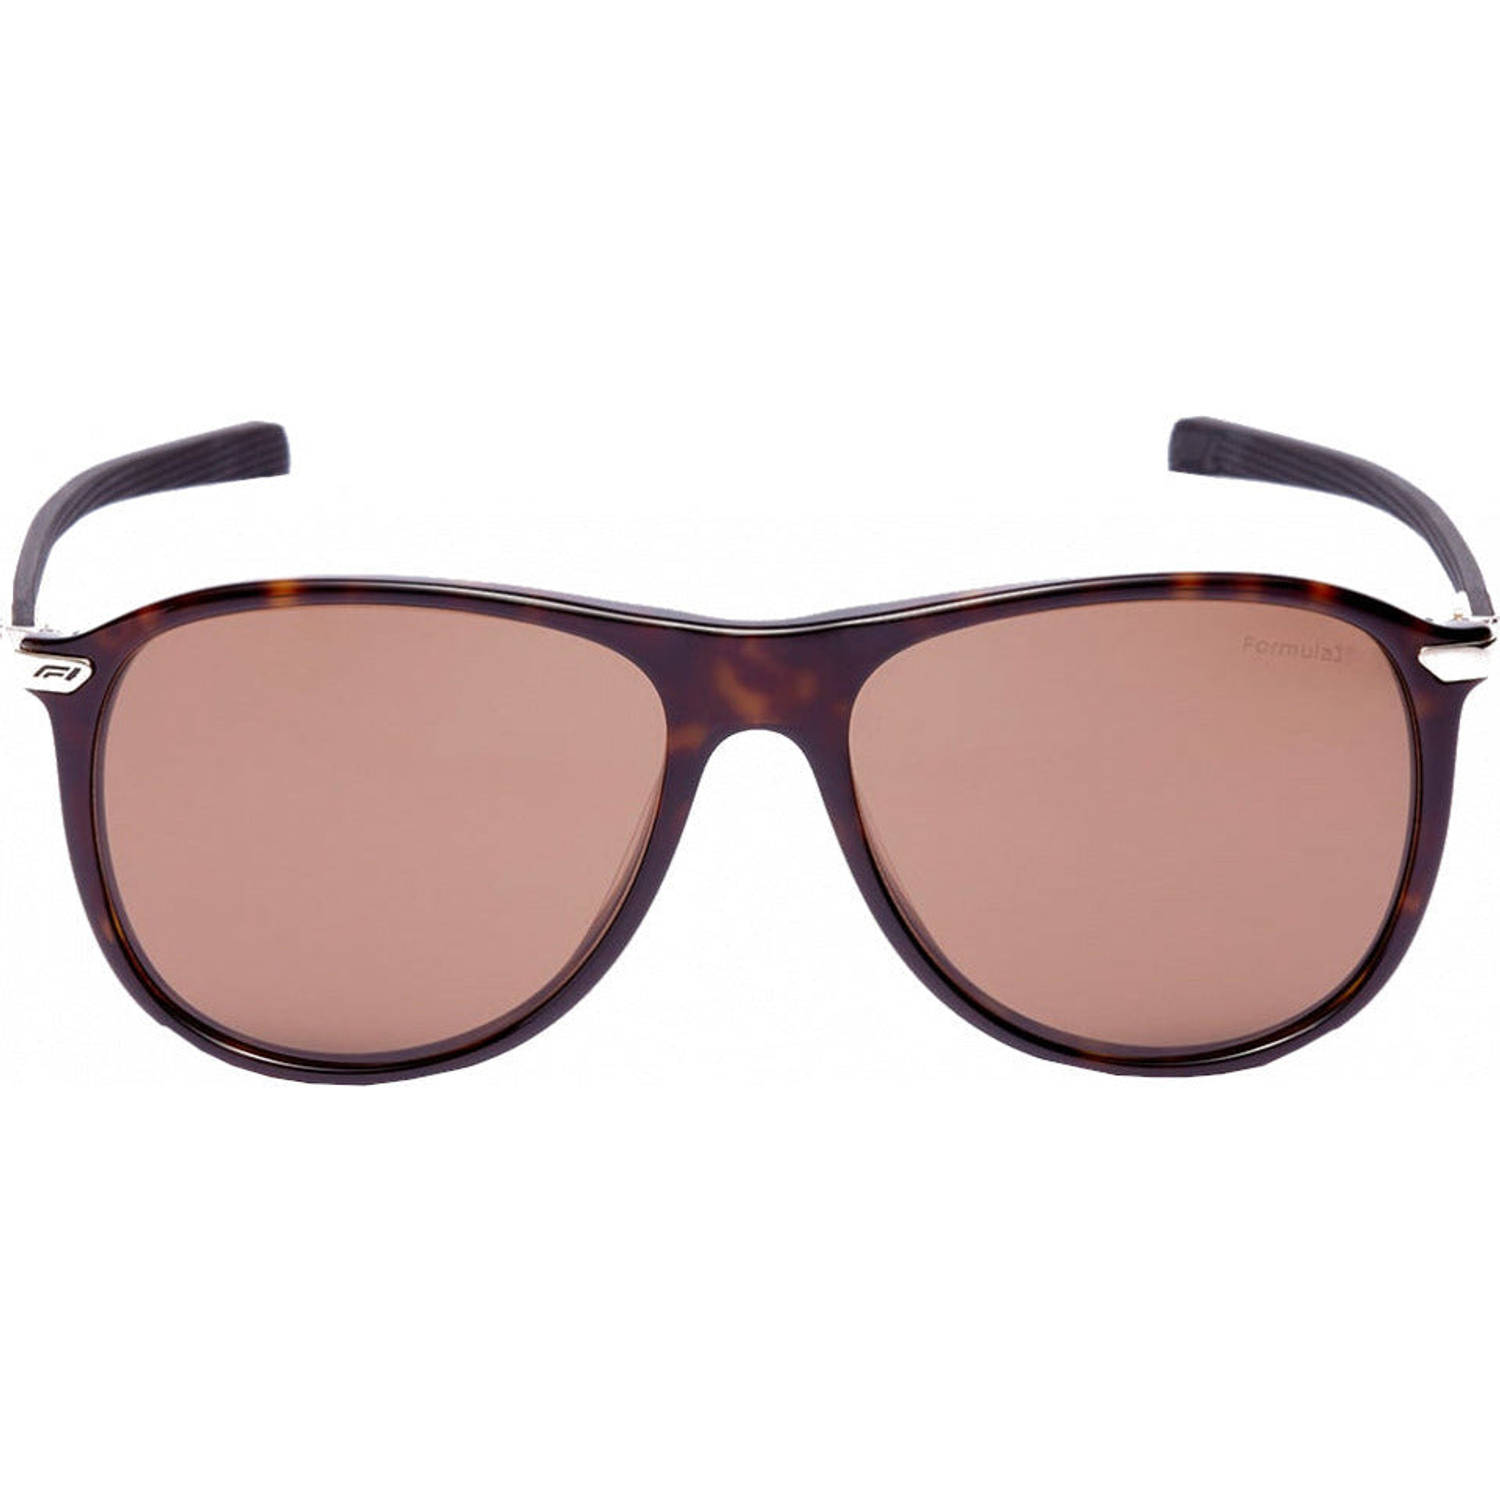 Formula 1 Eyewear zonnebril unisex rond cat.4 donkerbruin-bruin